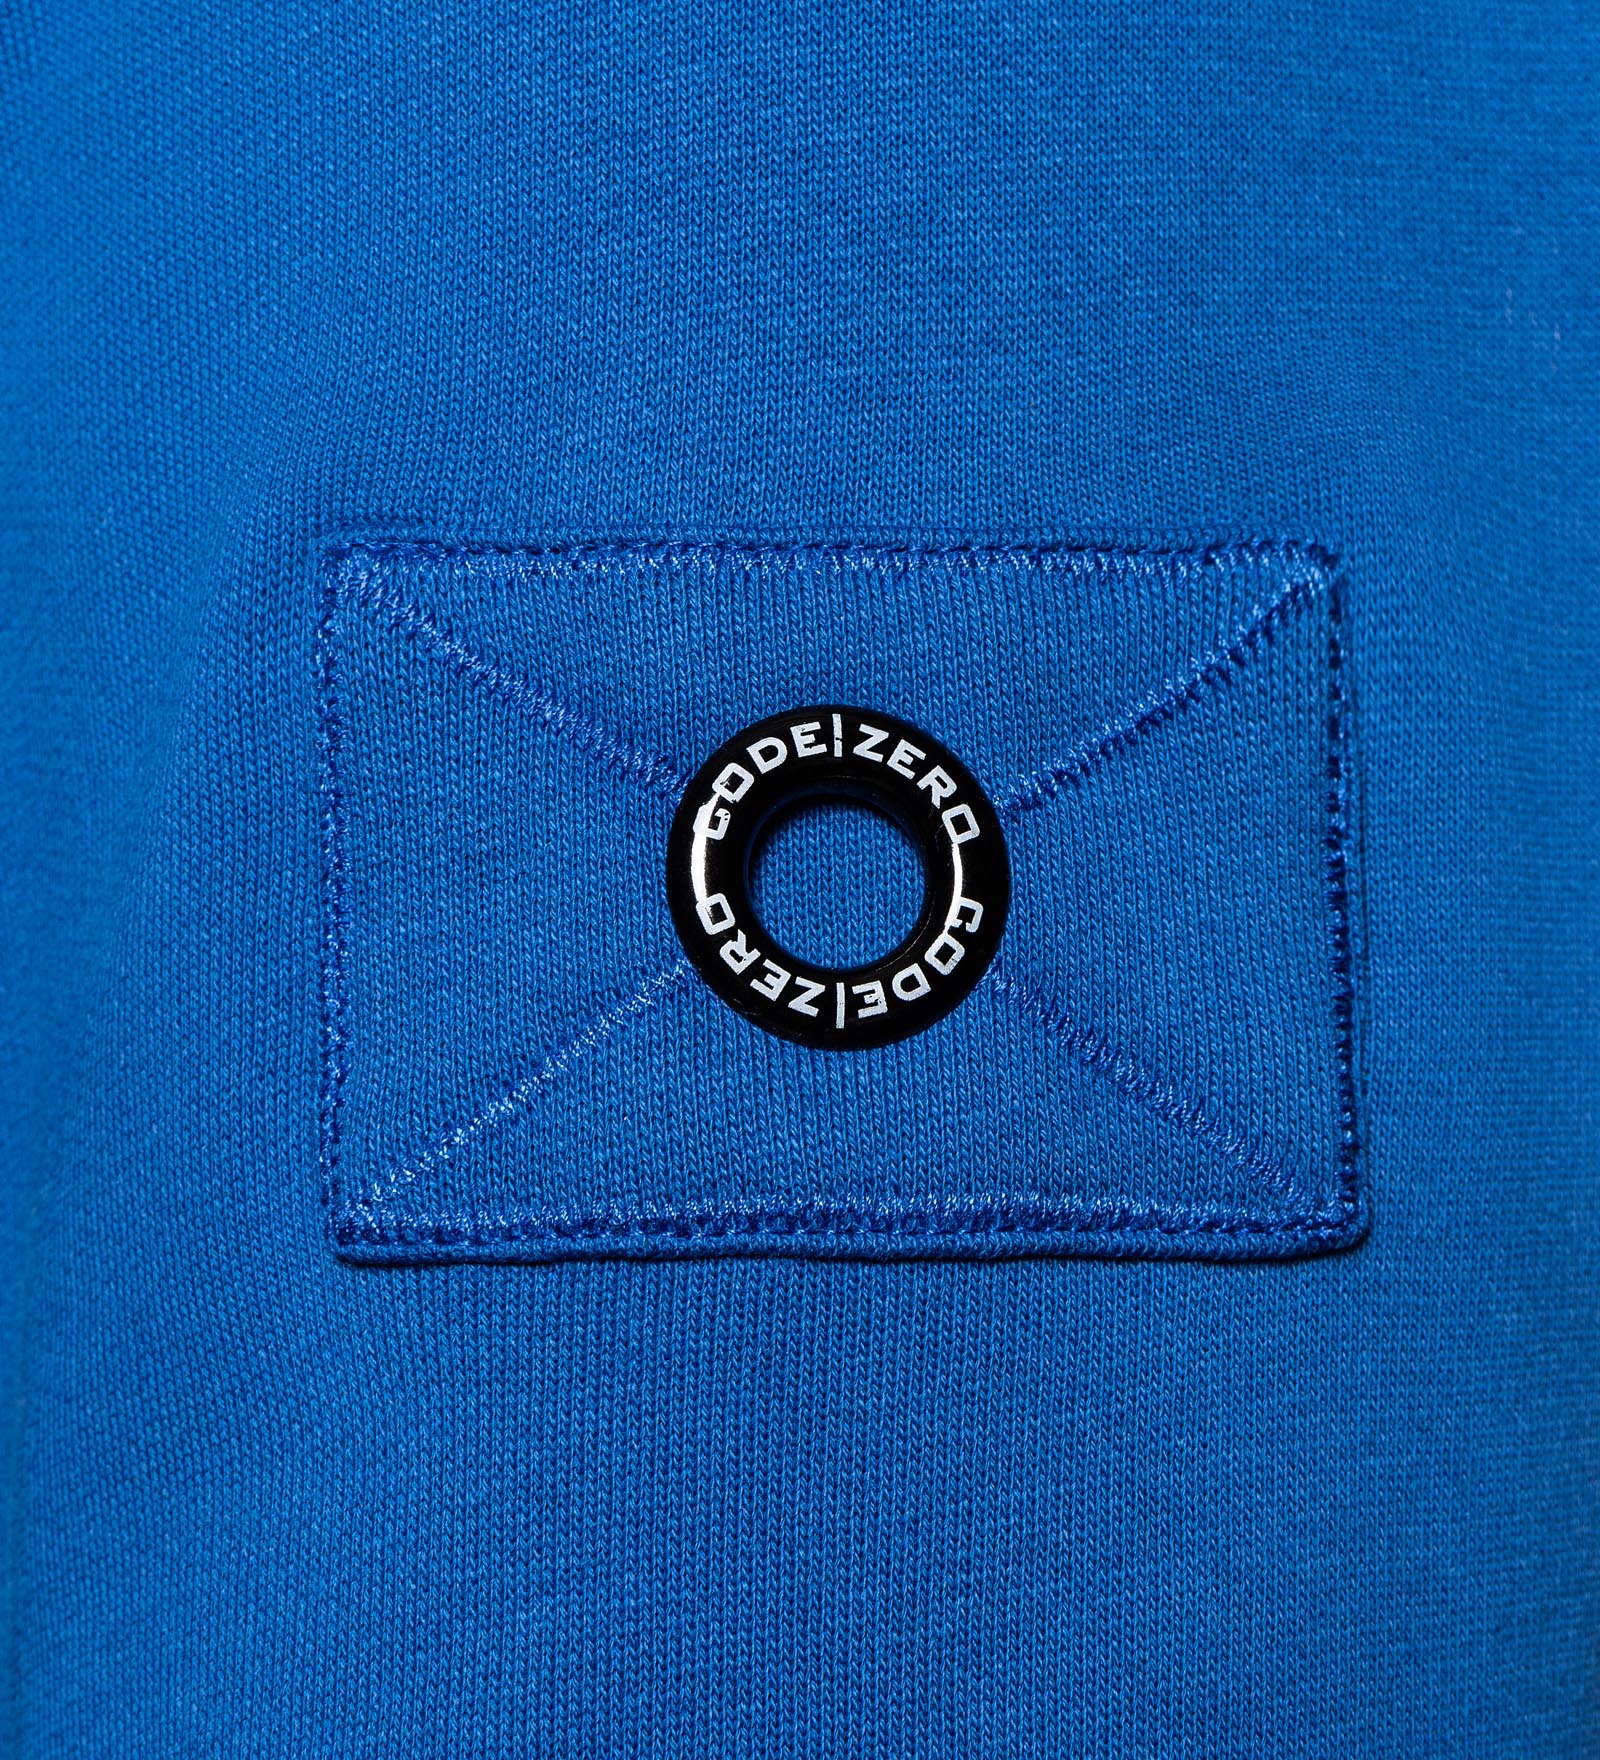 upwind-sweater-blue-detail-eyelet